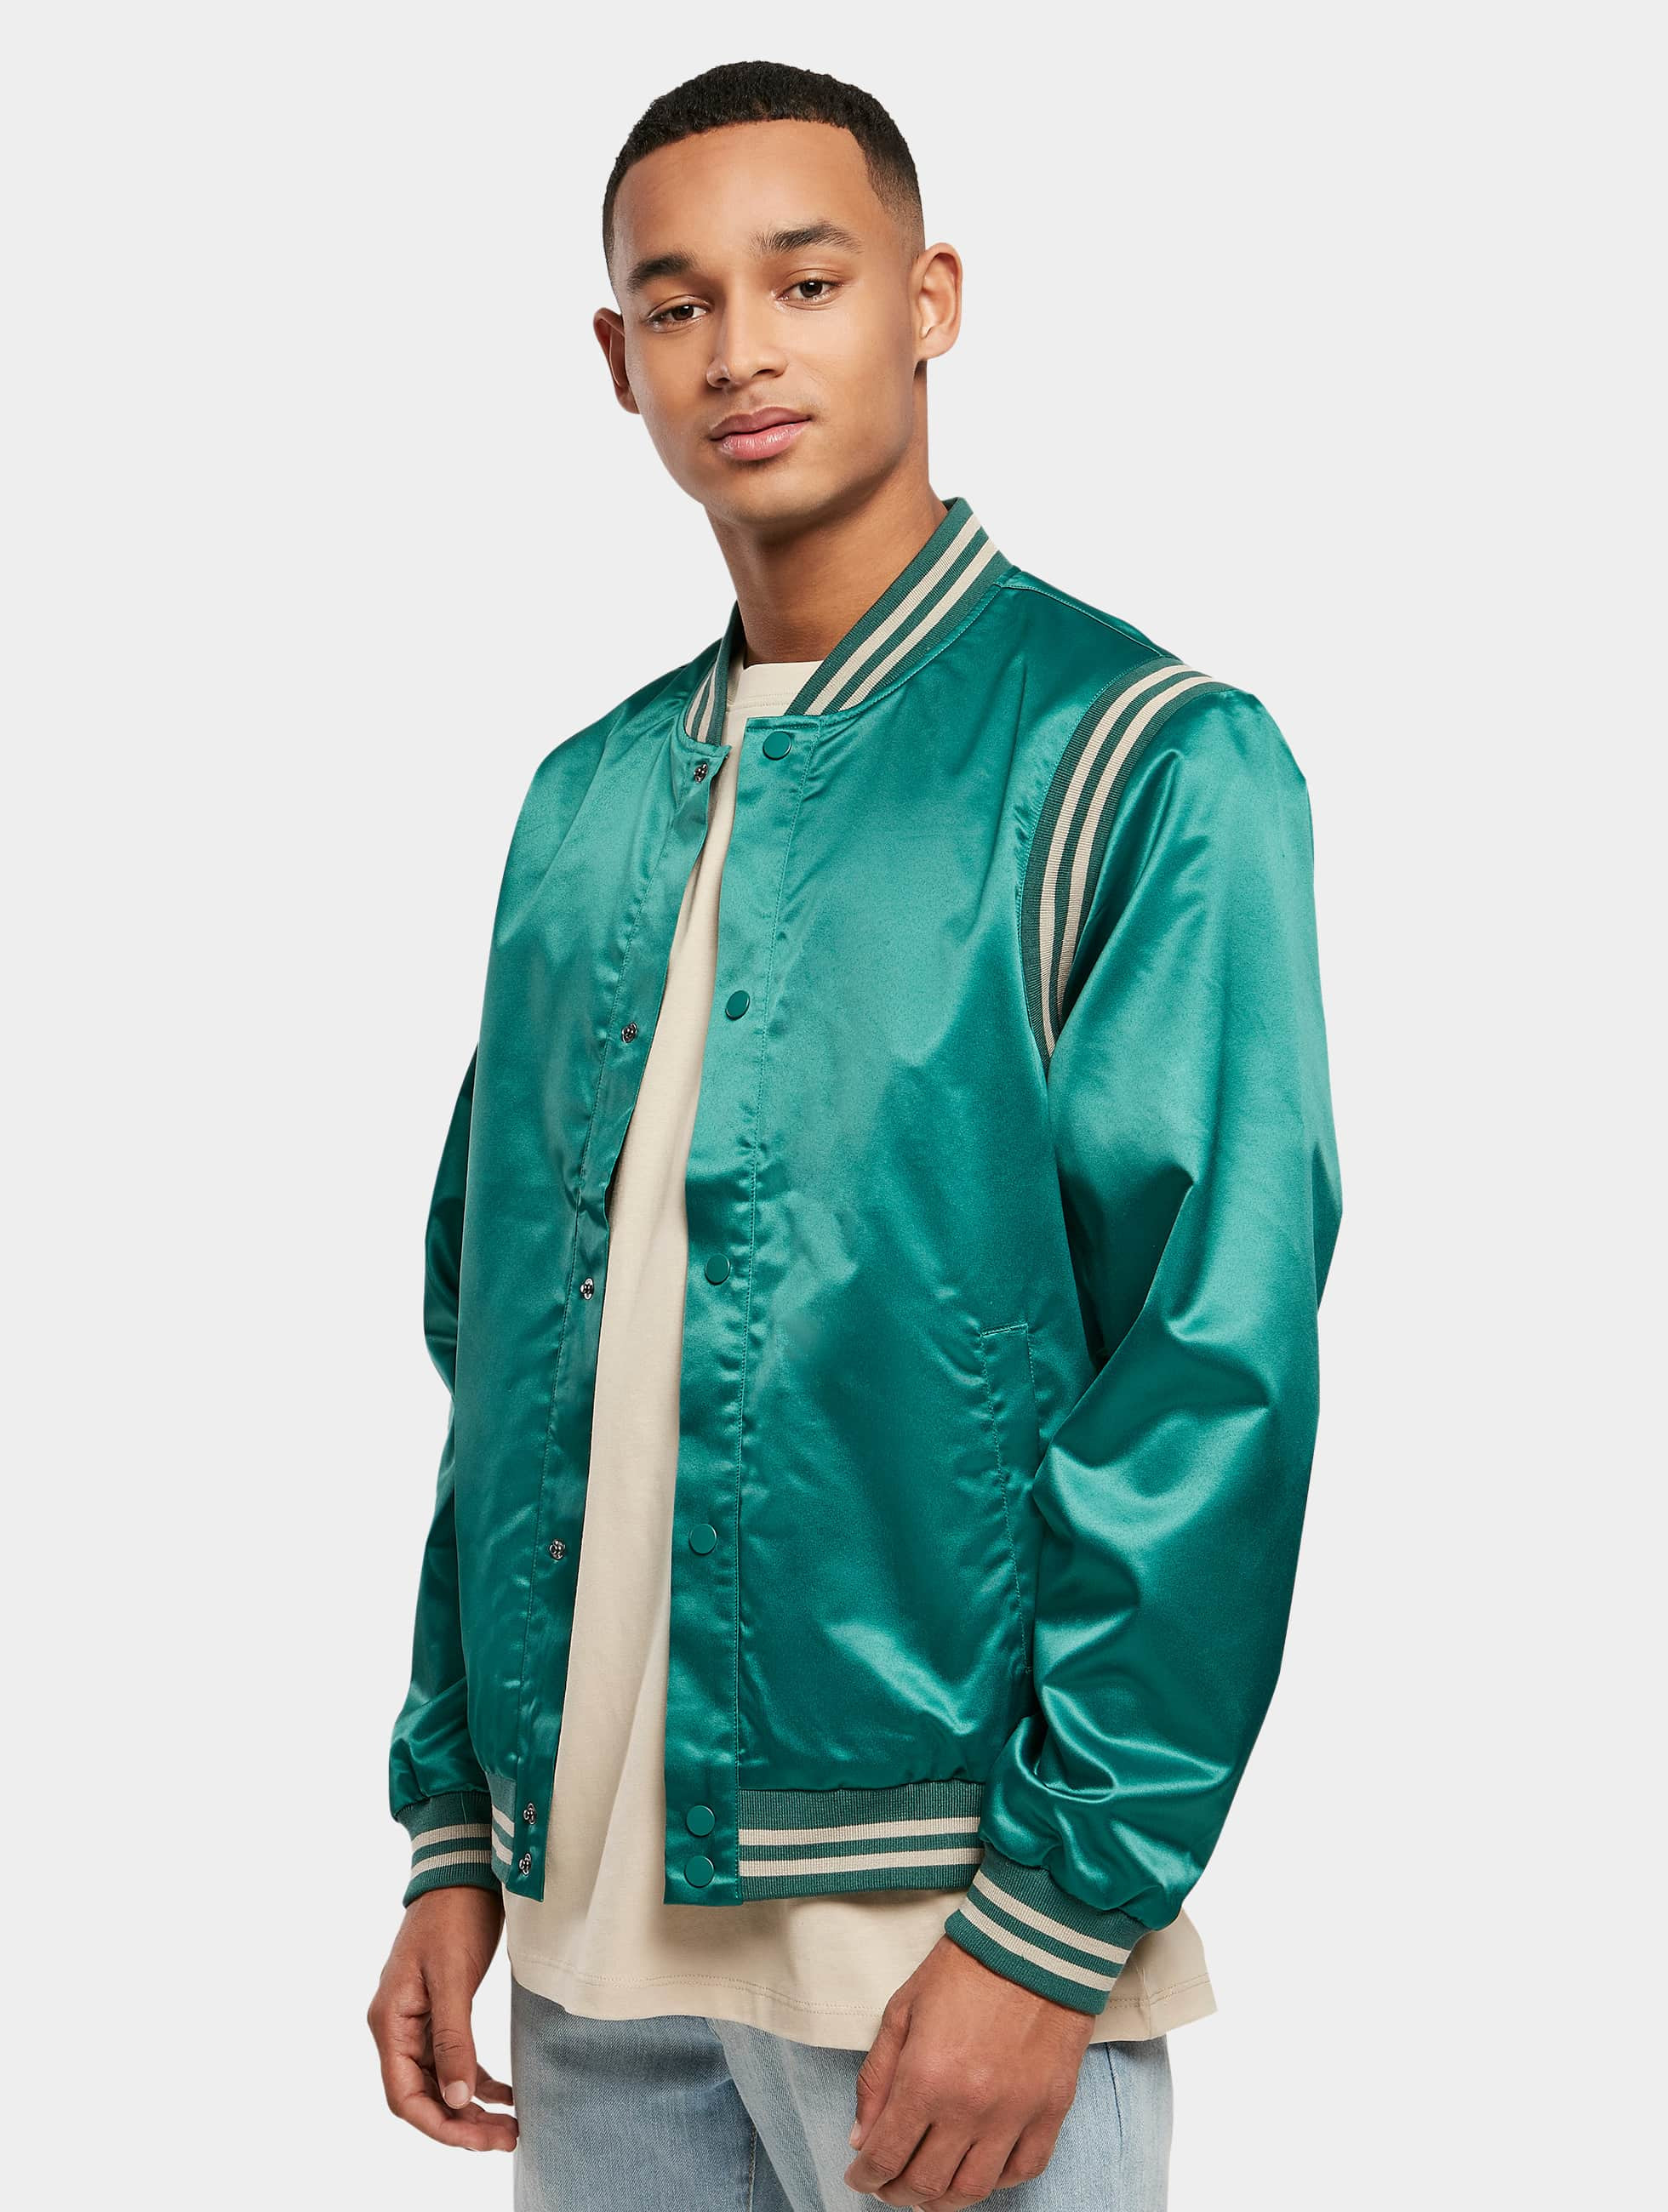 Urban Classics Jacket / College Jacket Satin in green 915704